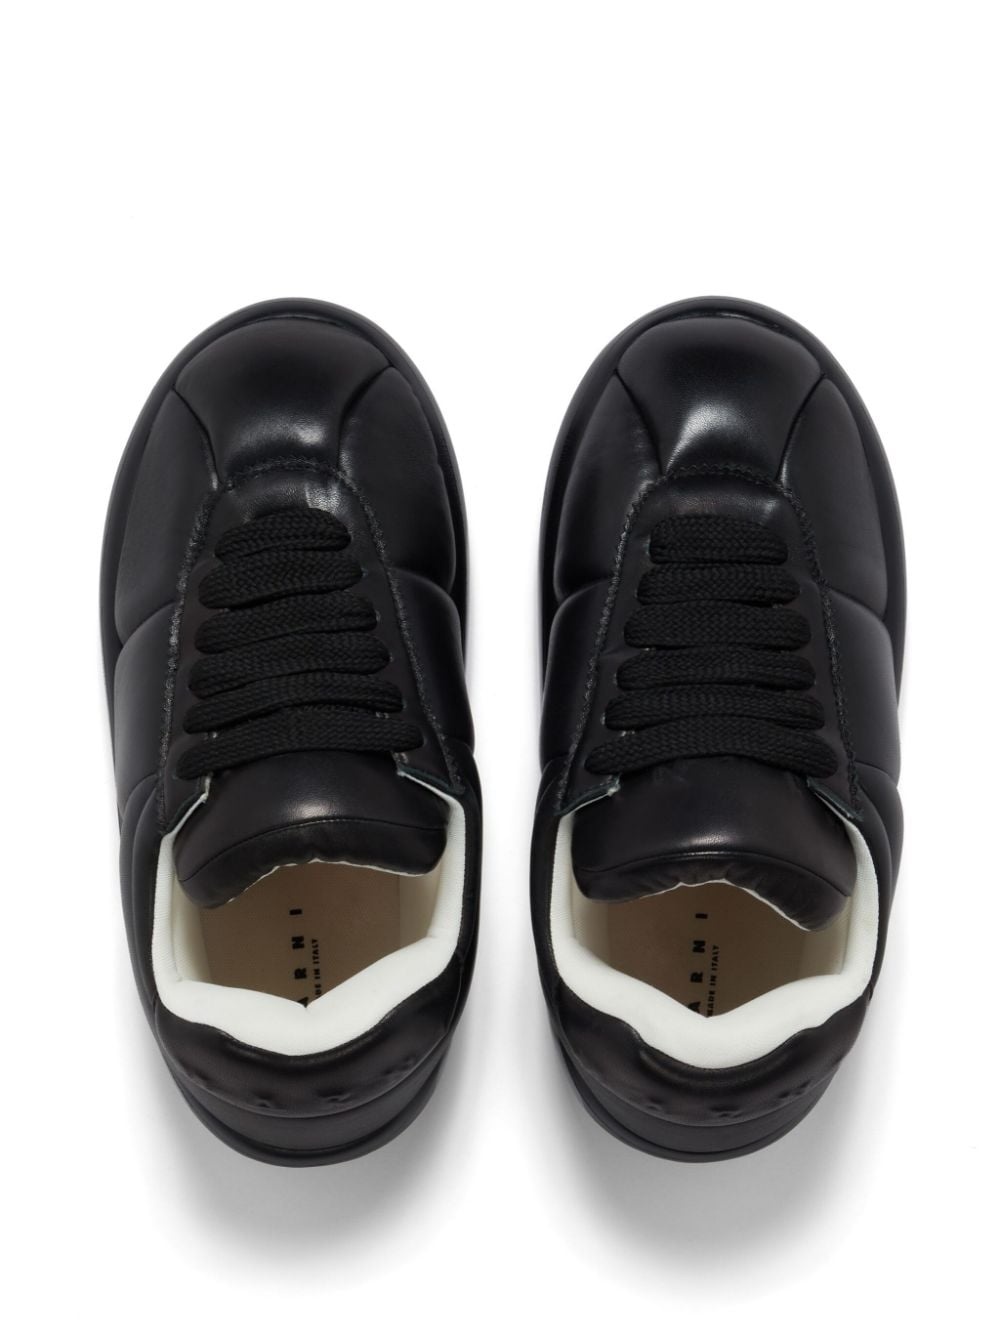 Bigfoot 2.0 leather sneakers - 3